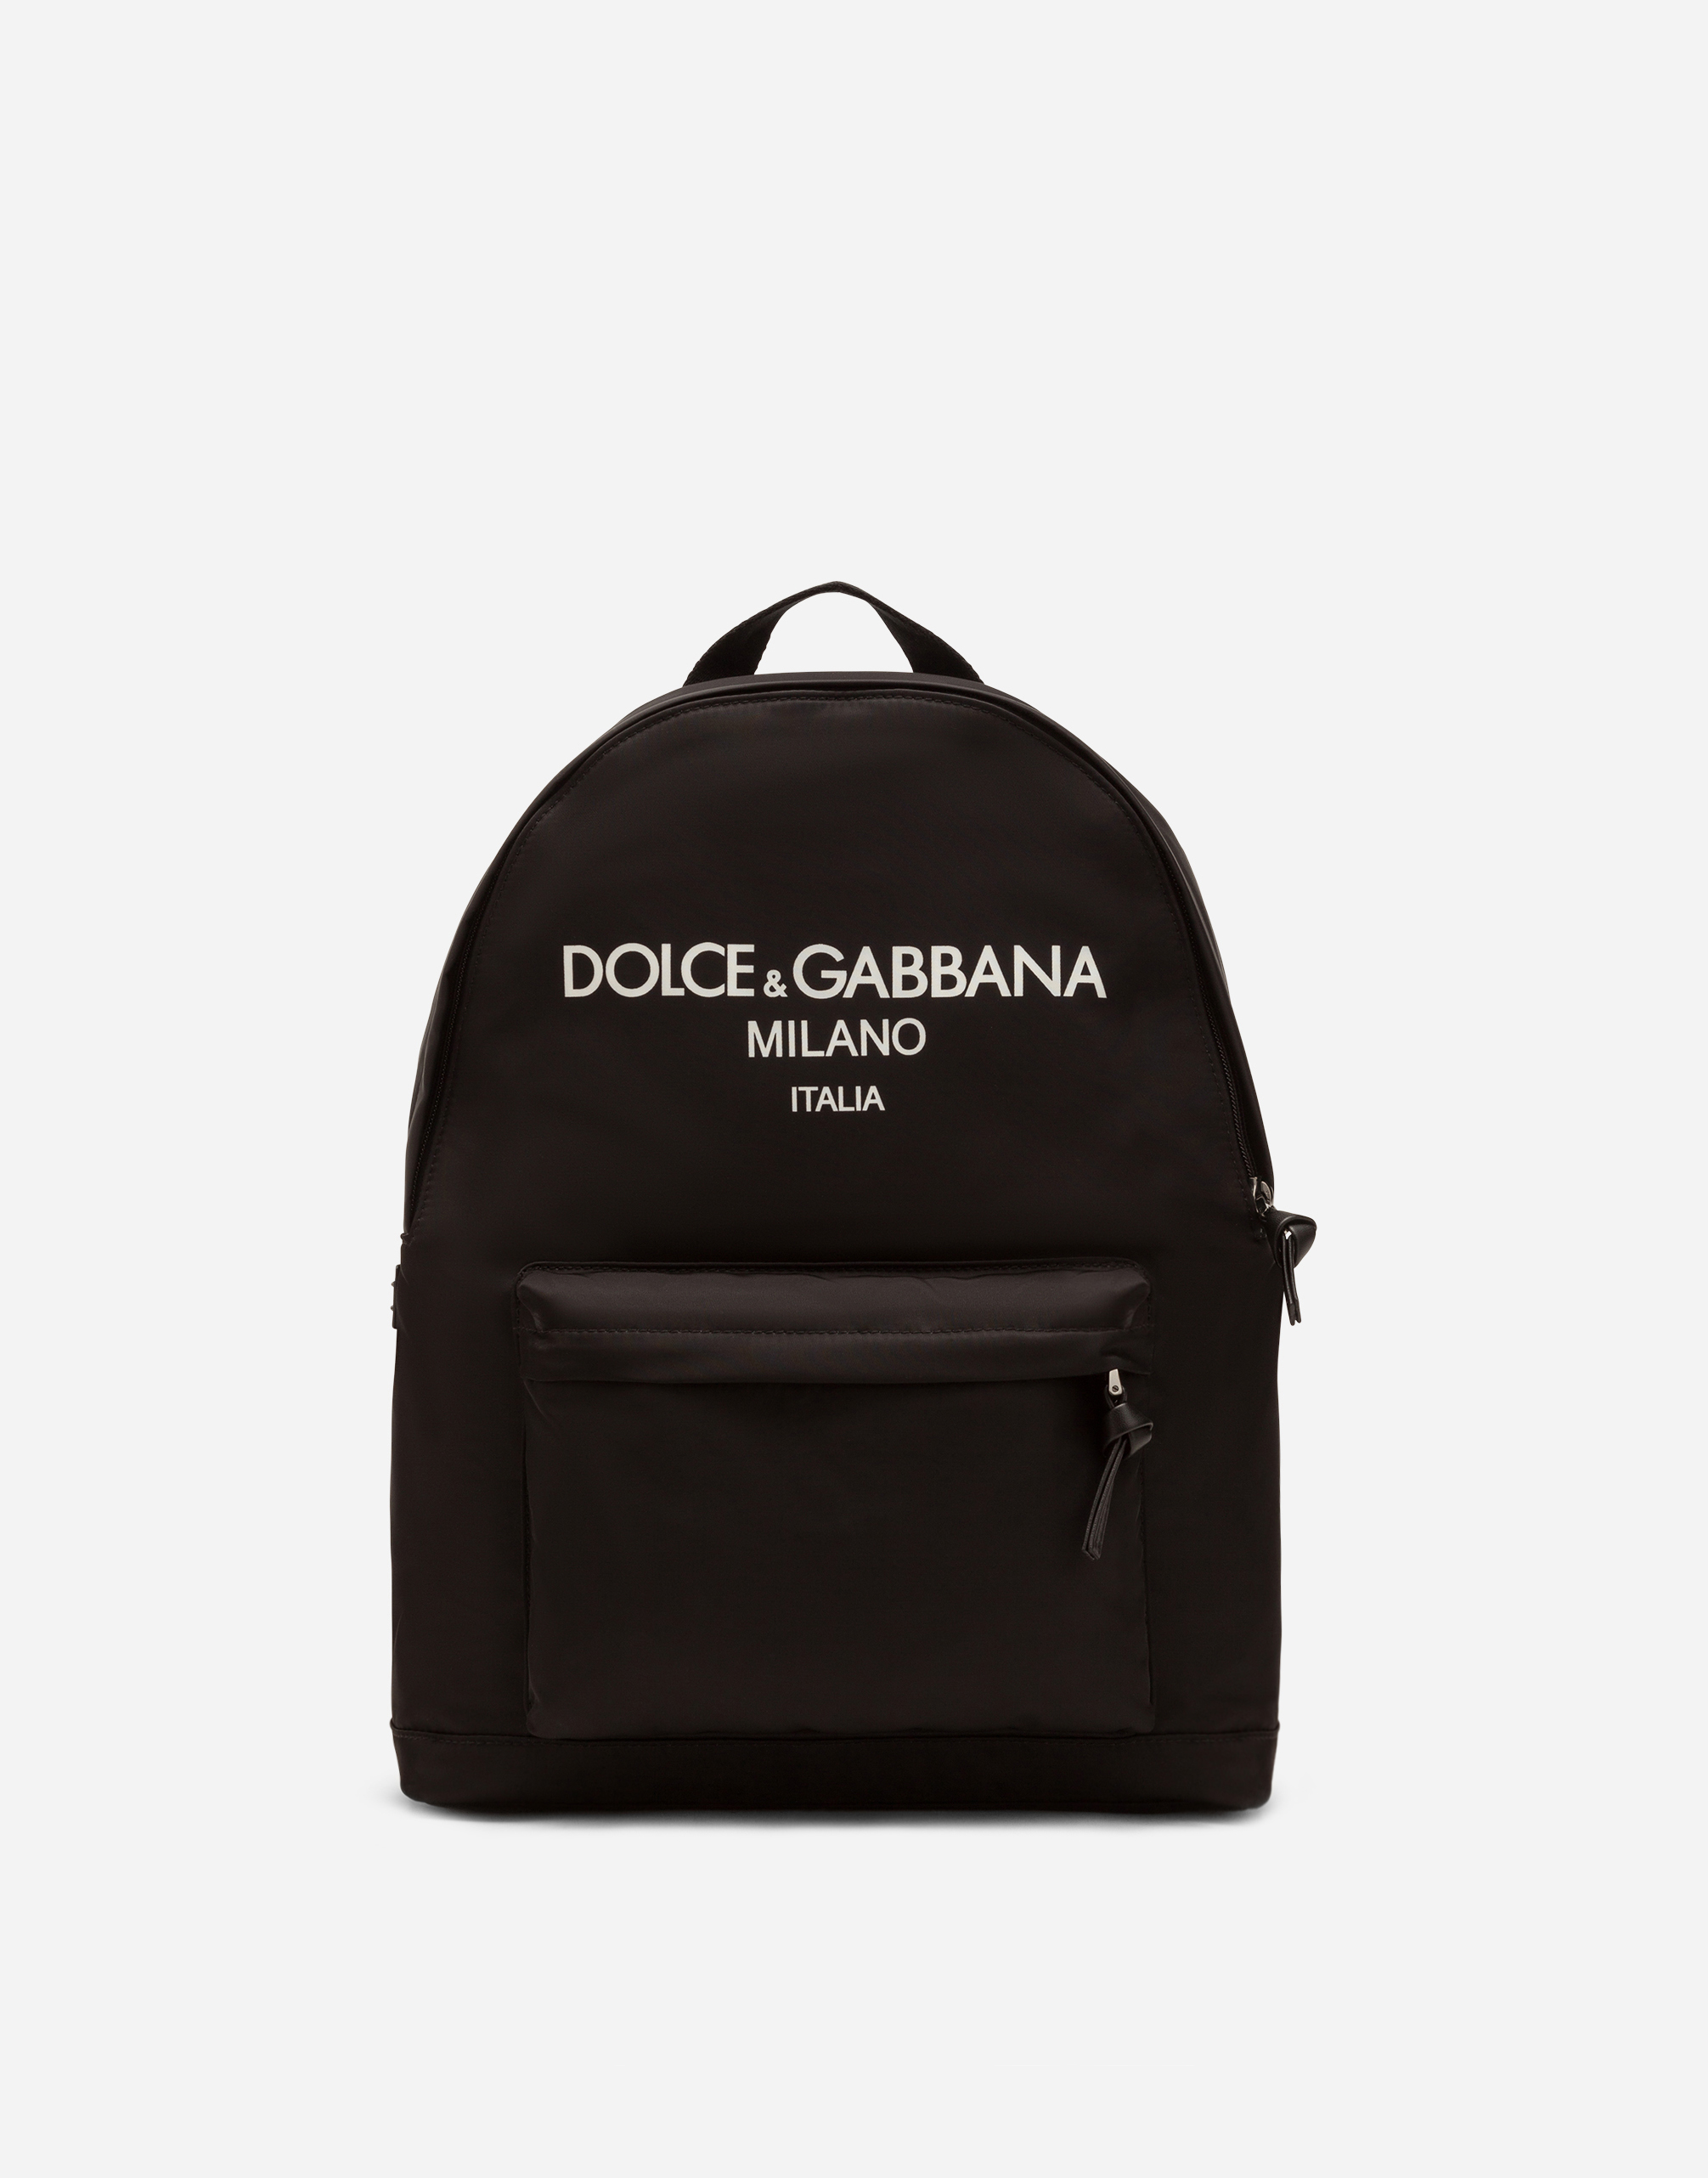 Nylon backpack with dolce&gabbana milano logo